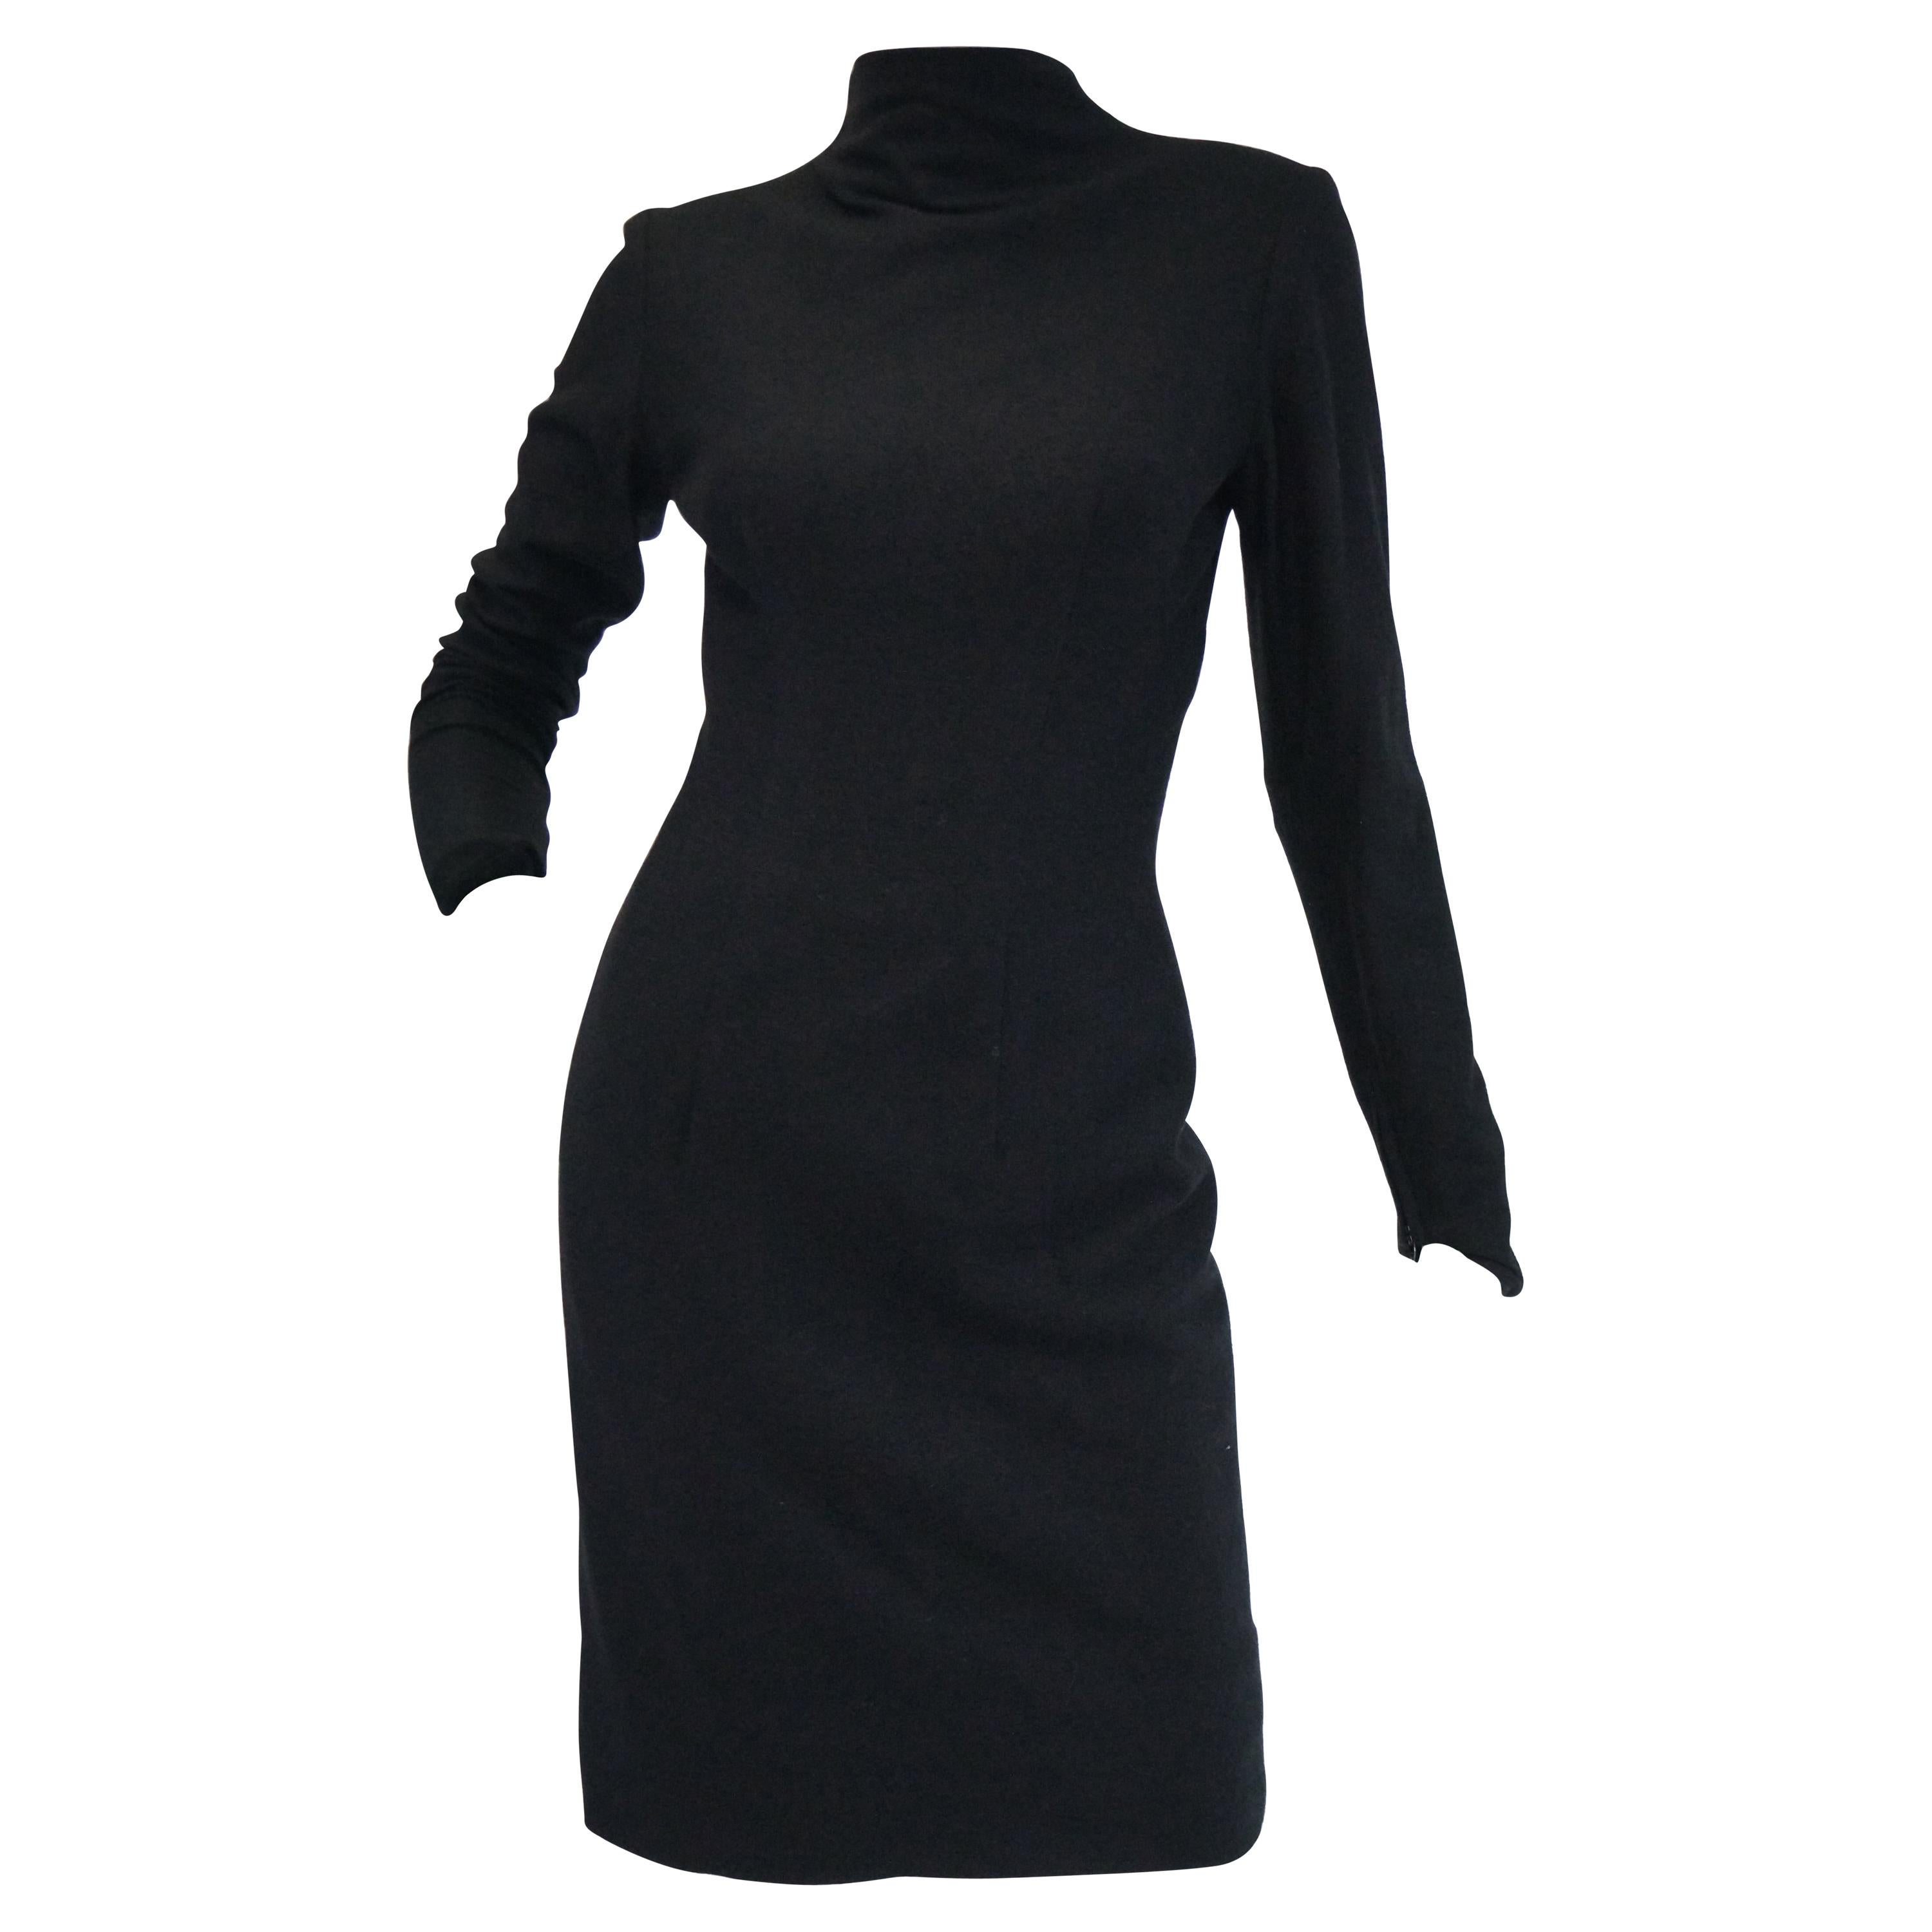 Rare 1960s Eisenberg Black Wool Mod Style Sheath Dress